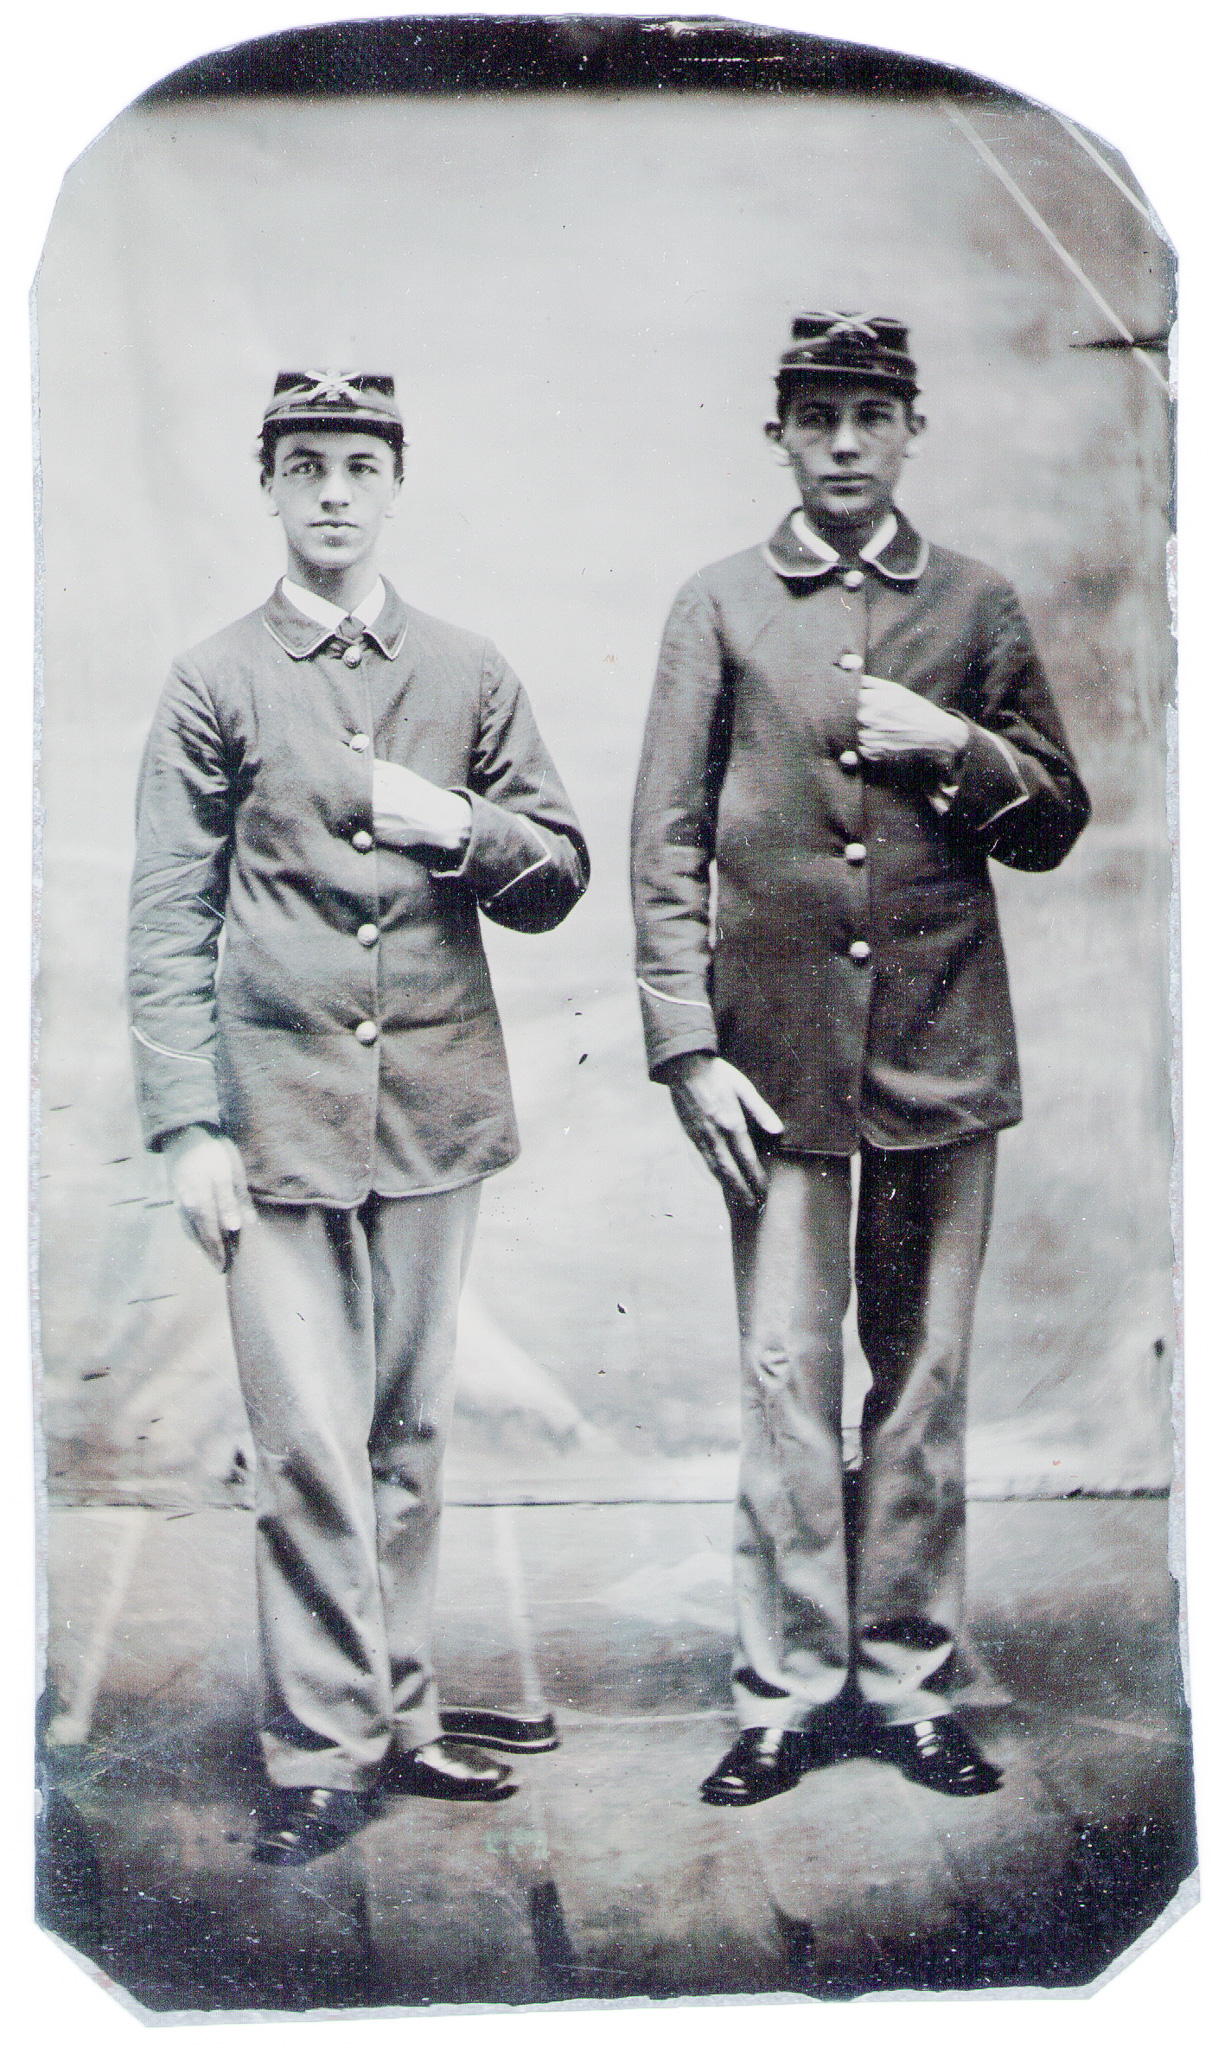 B. F. Richards (left) & Ed Beynon